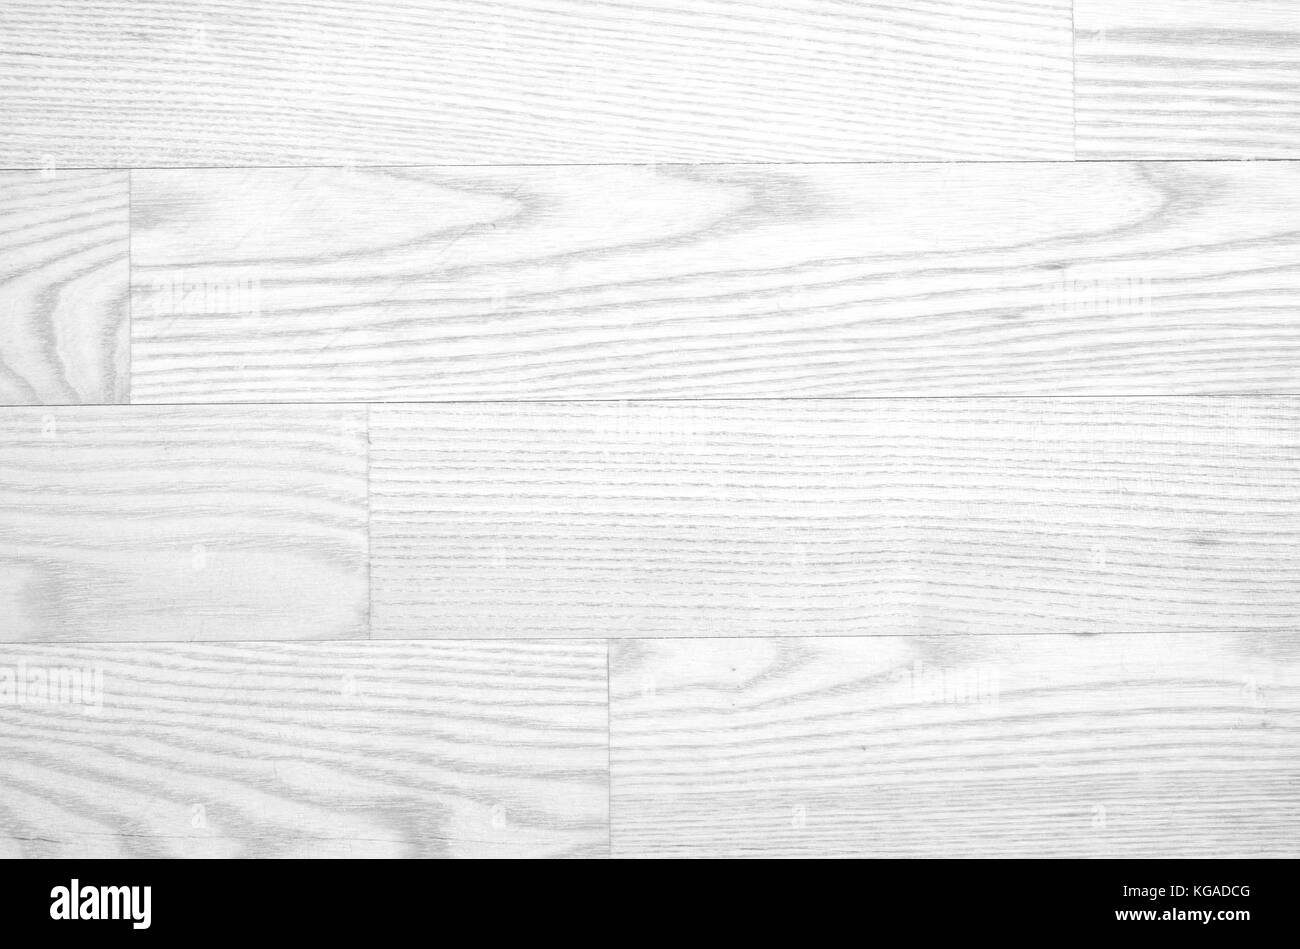 White wooden parquet, floor surface. Light wood texture Stock Photo - Alamy